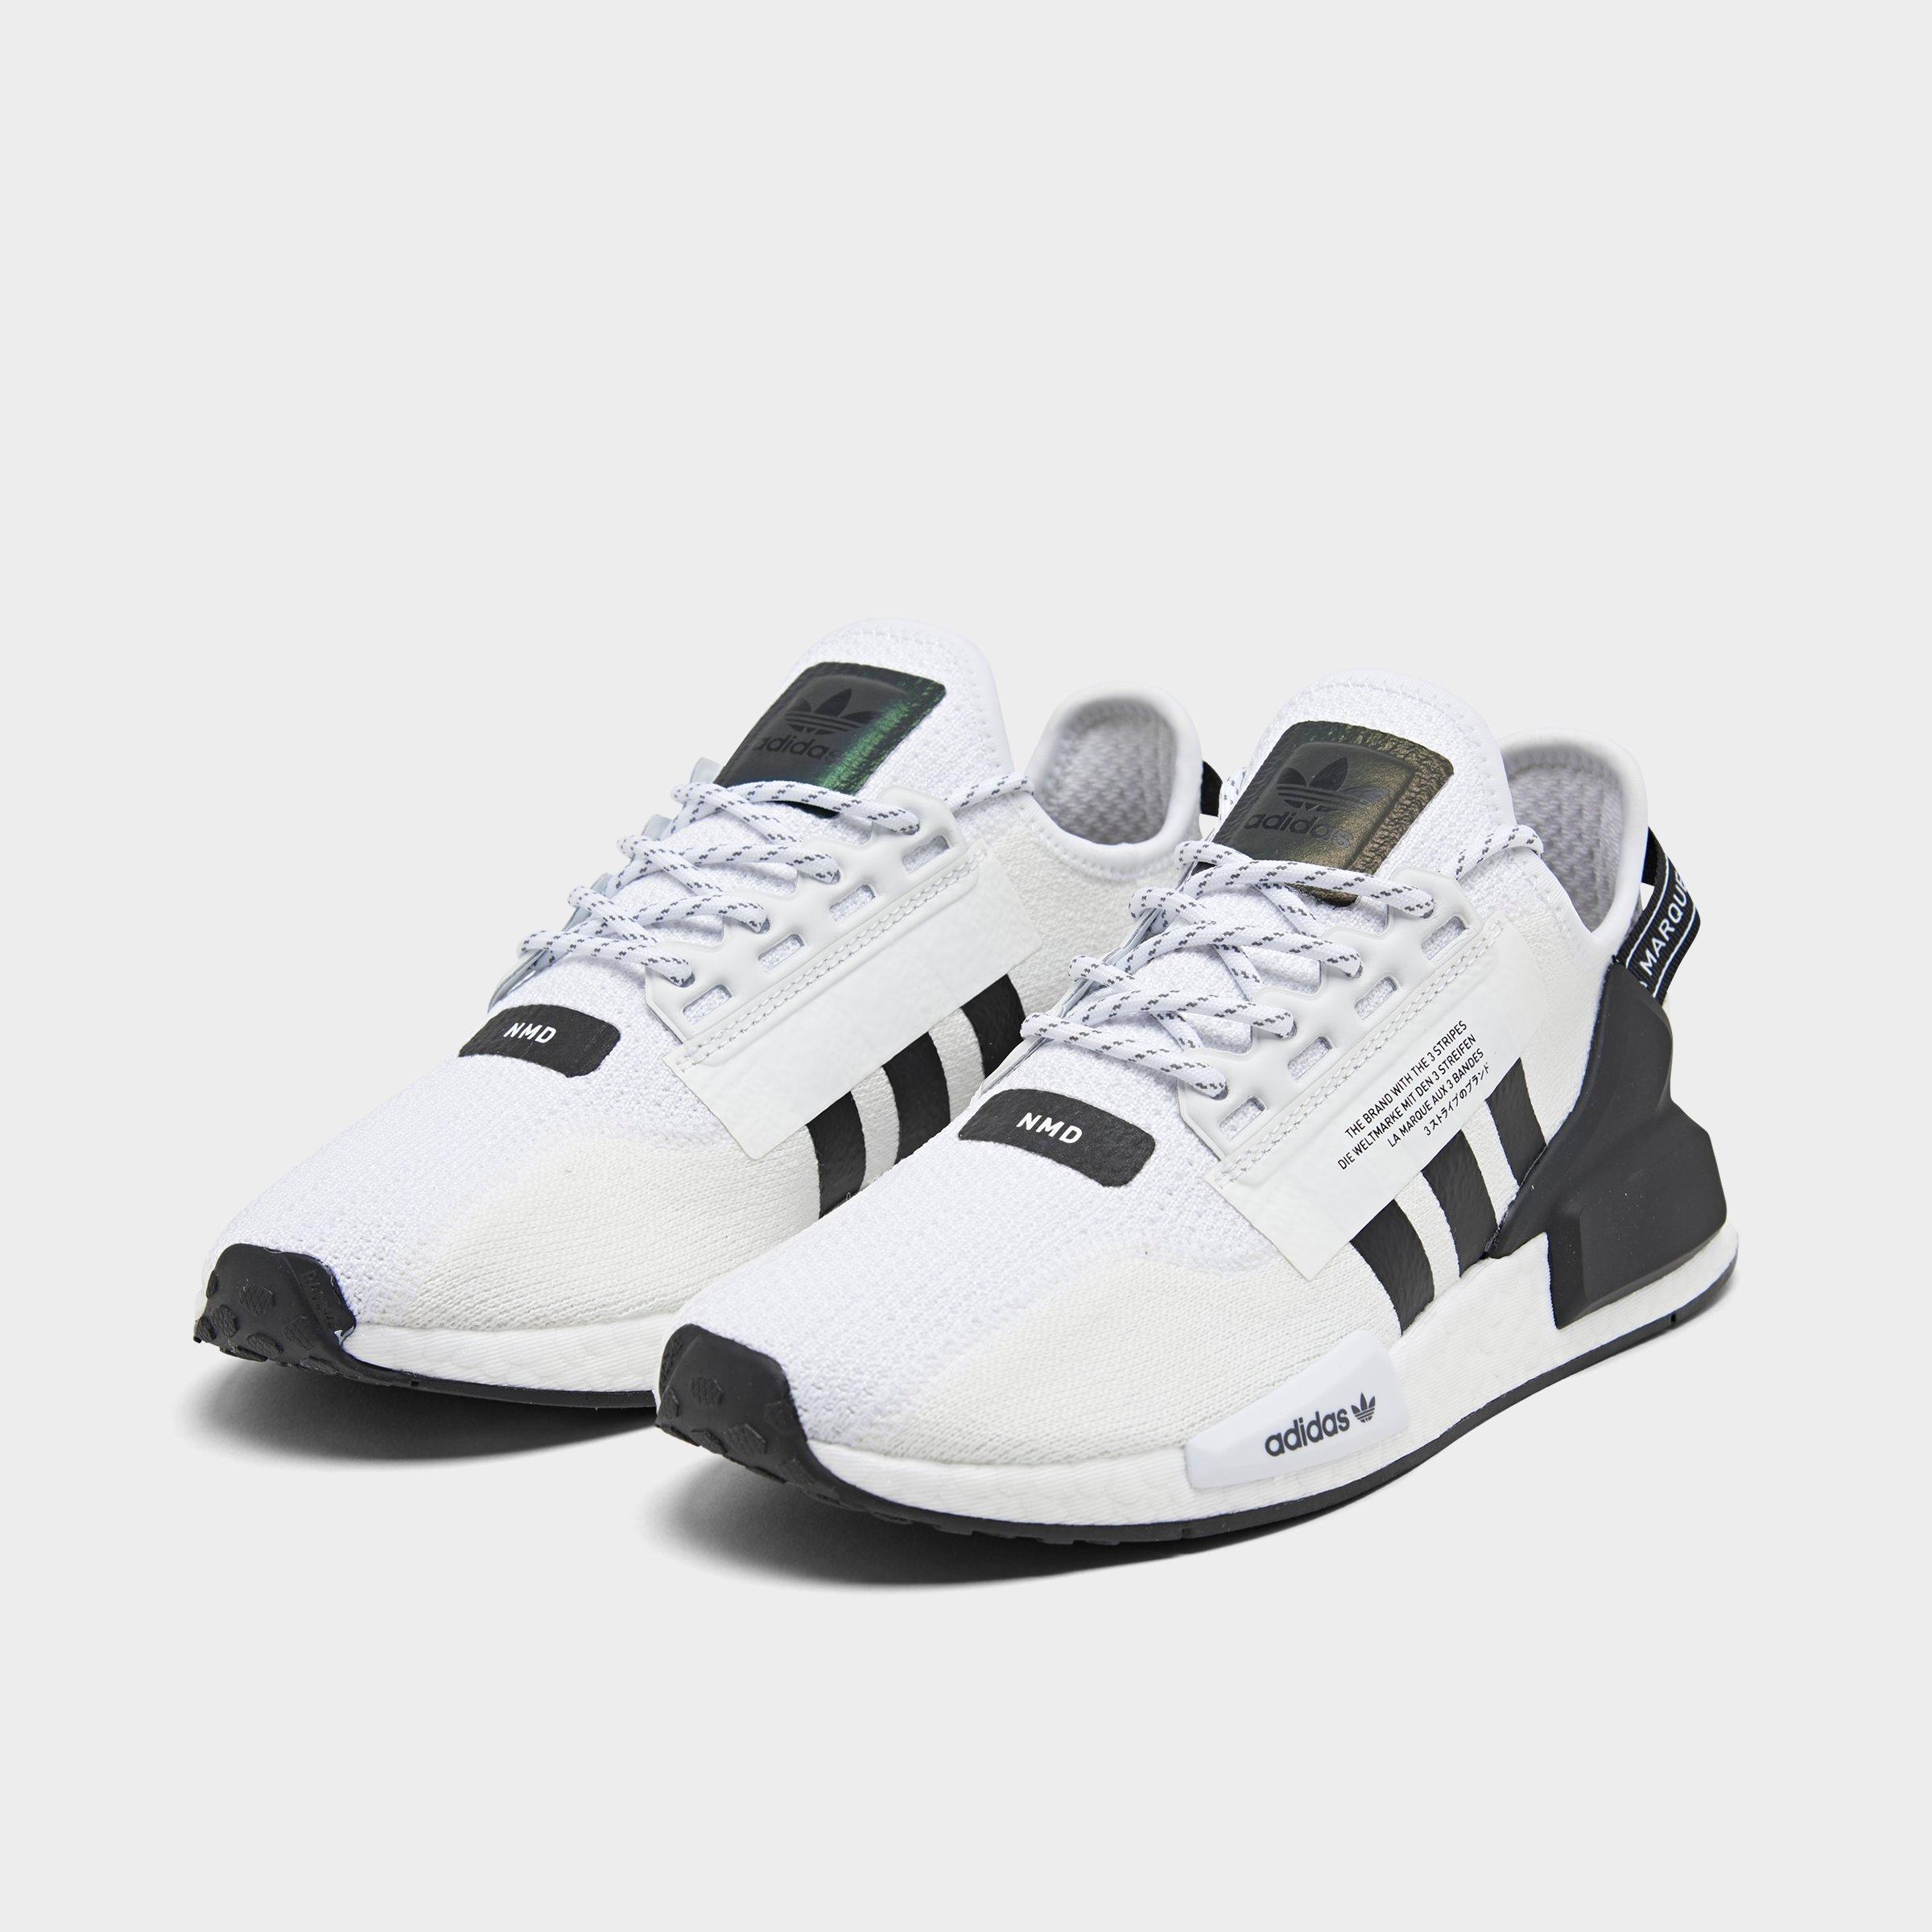 Adidas NMD R1 PK Tri Color White BB2888 Sneaker District